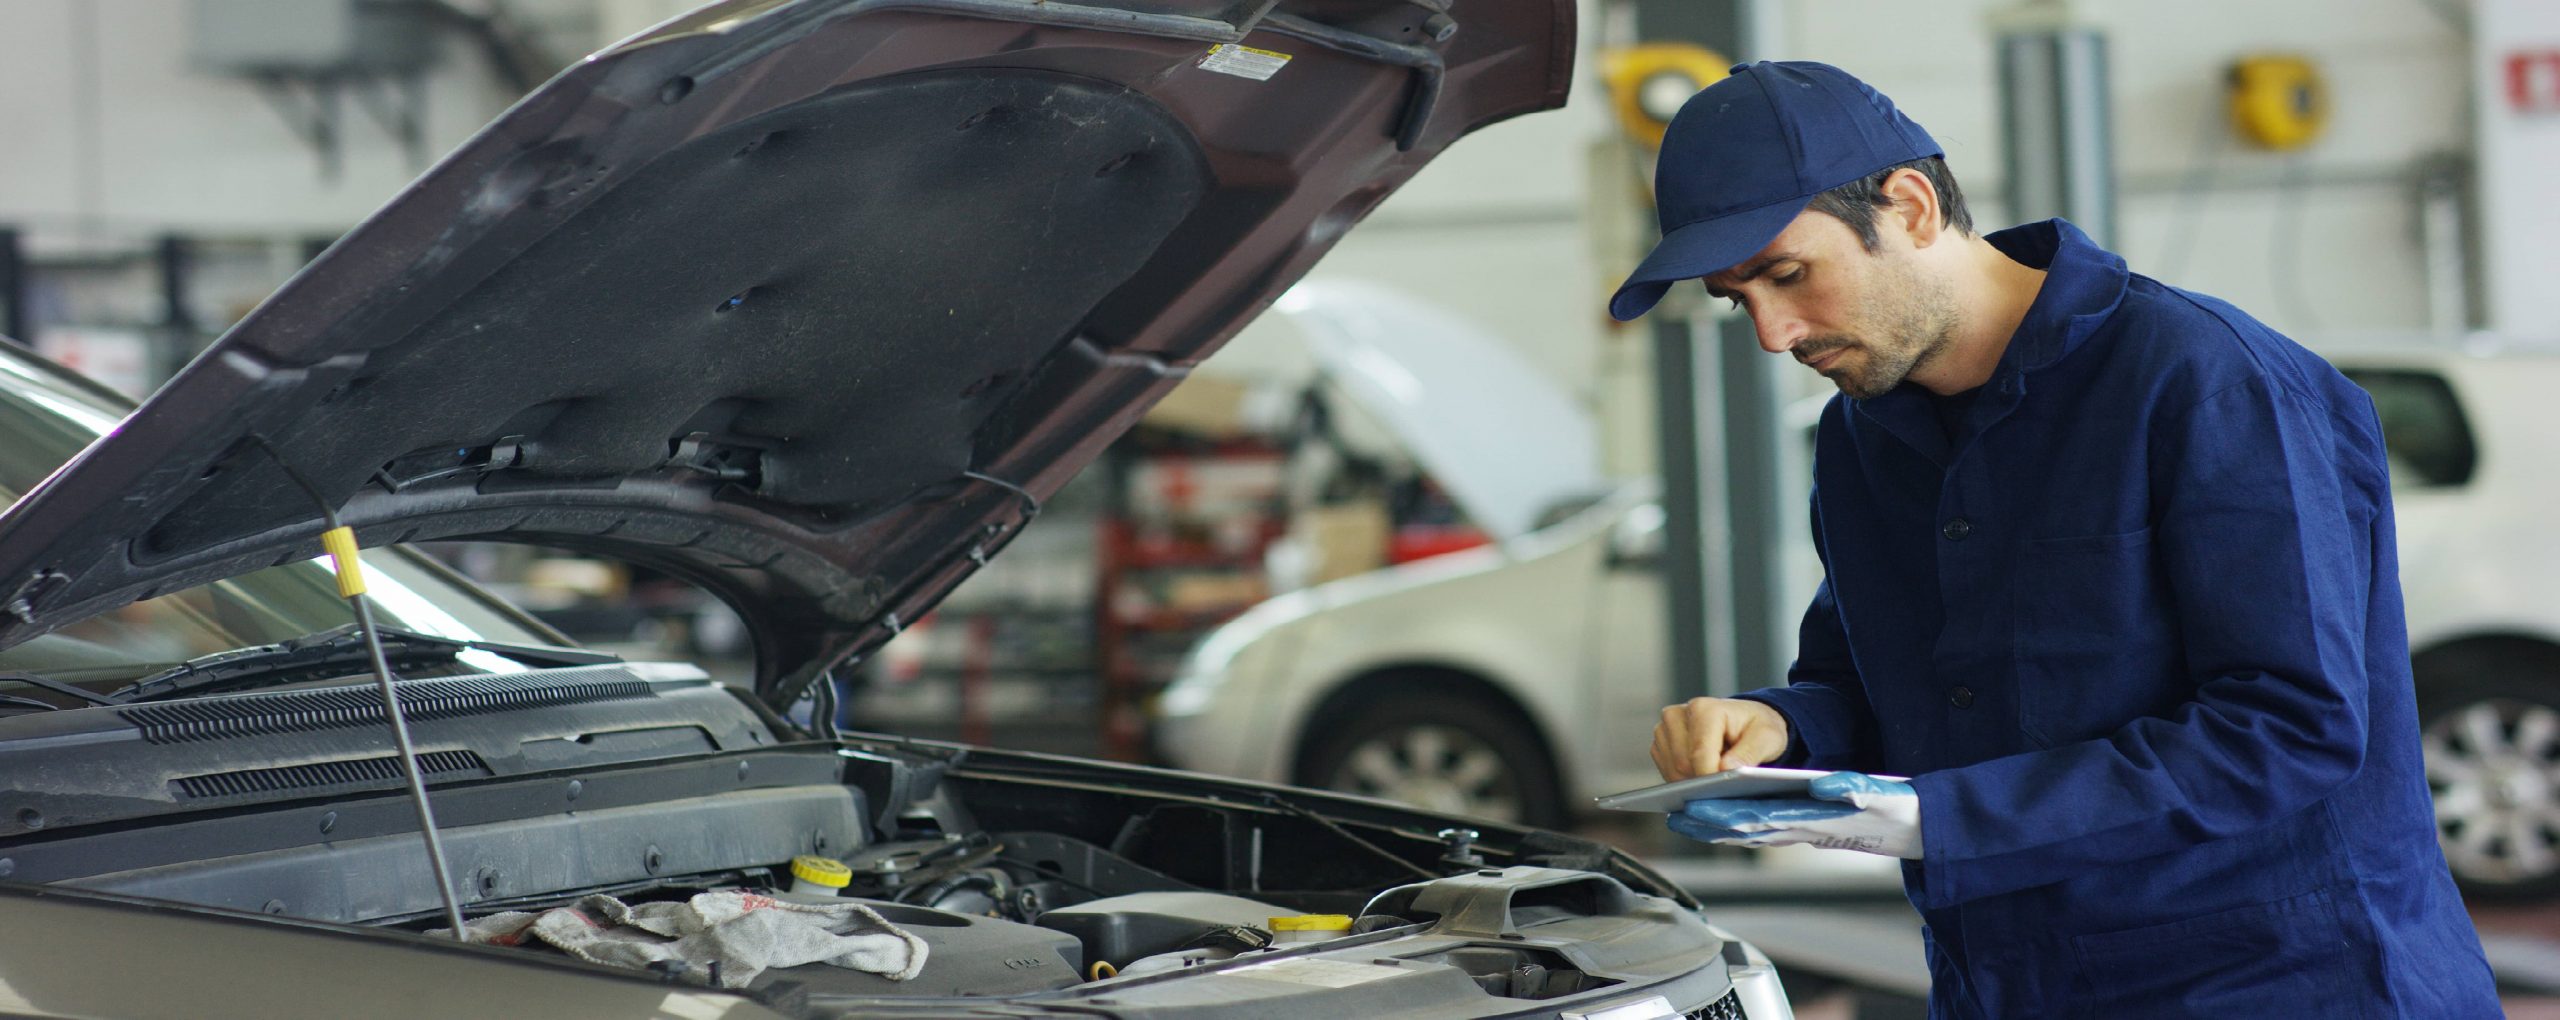 Is an automotive technician a good career? 2021 Guide